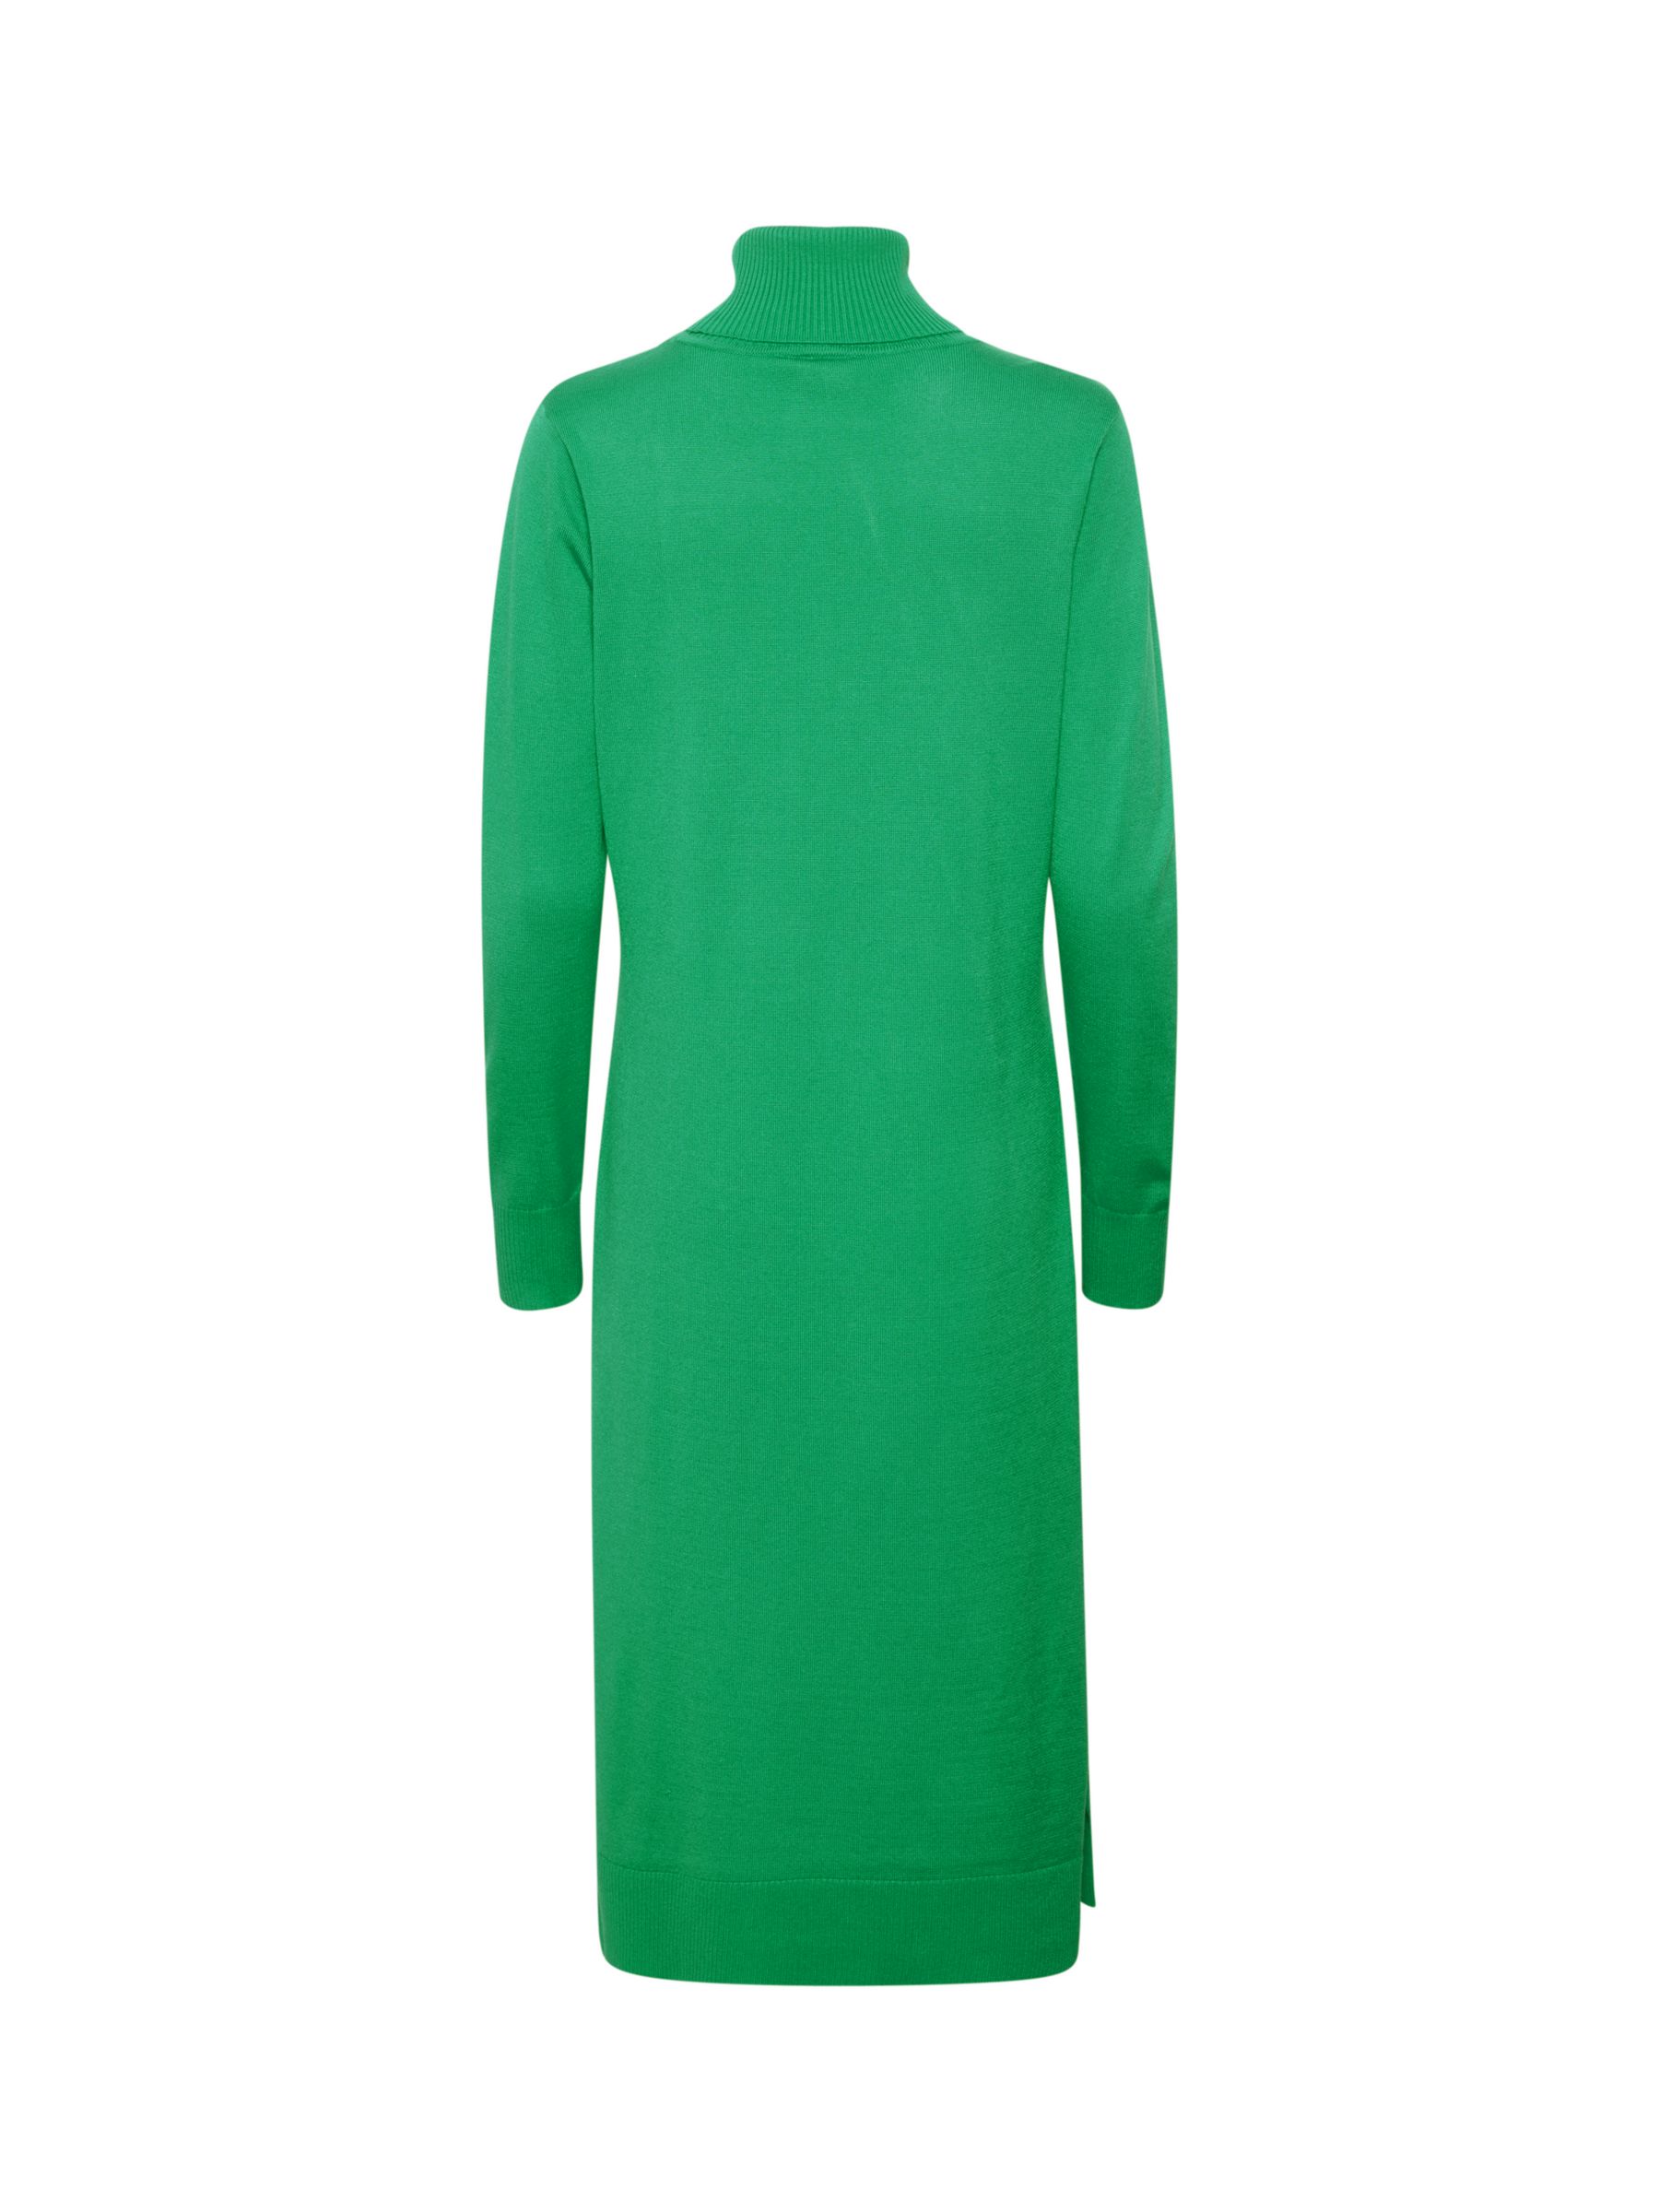 Dress, Green Verdant John Partners Rollneck Mila & Midi at Lewis Melange Saint Tropez